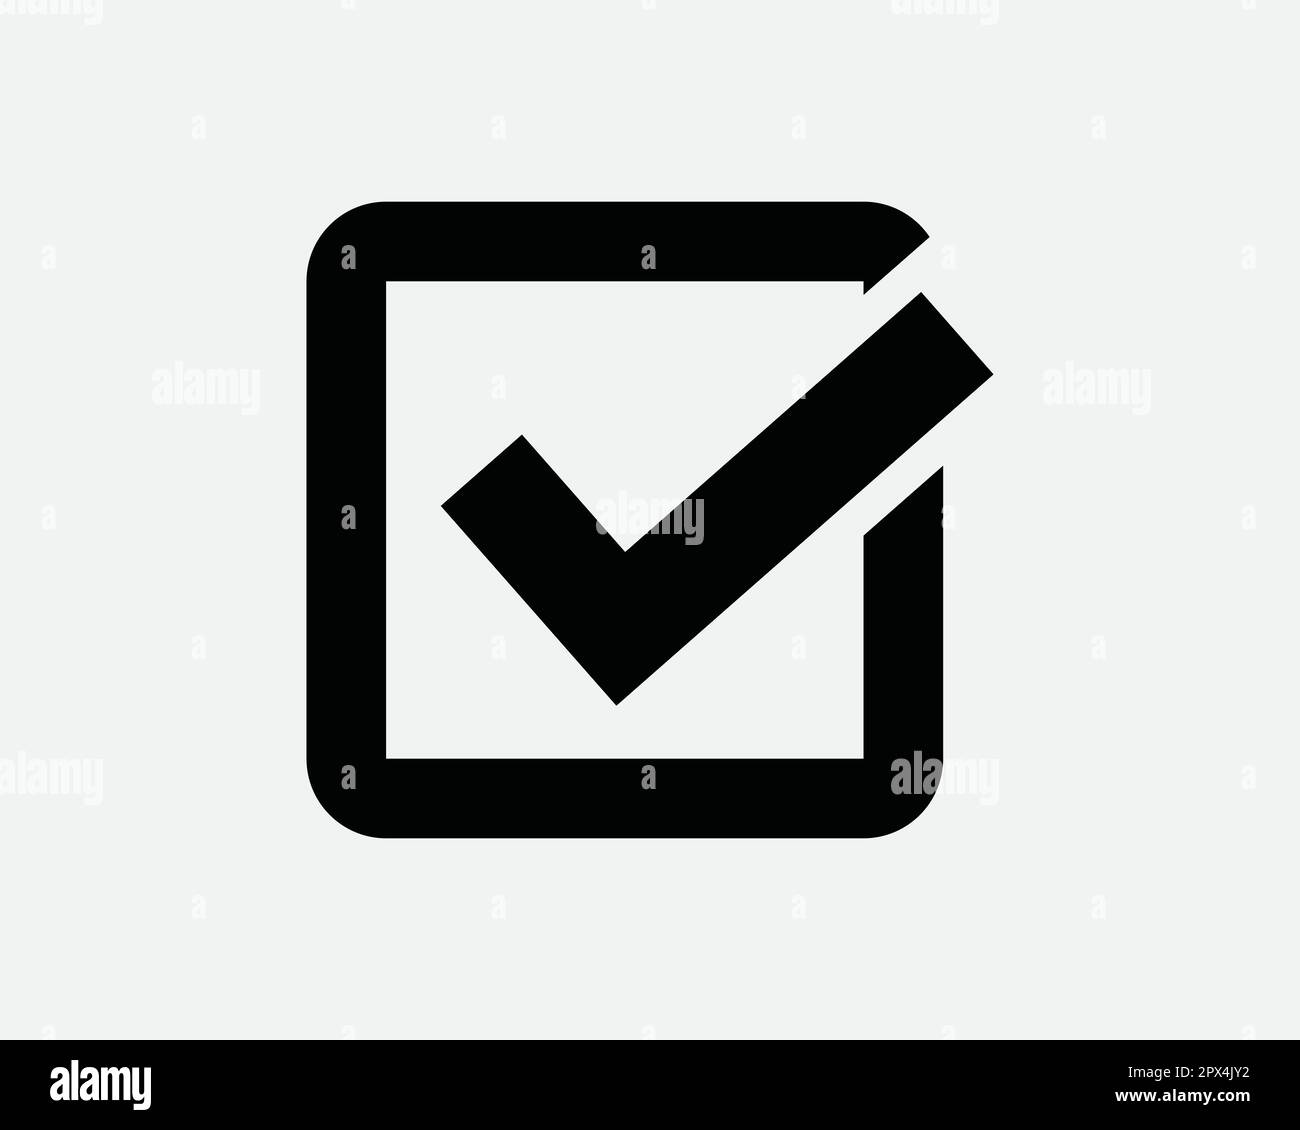 Checkbox Icon. Black Tick Mark Check Box Accept Checklist Approved Voting Poll Confirm Sign Symbol Artwork Graphic Illustration Clipart Vector Cricut Stock Vector